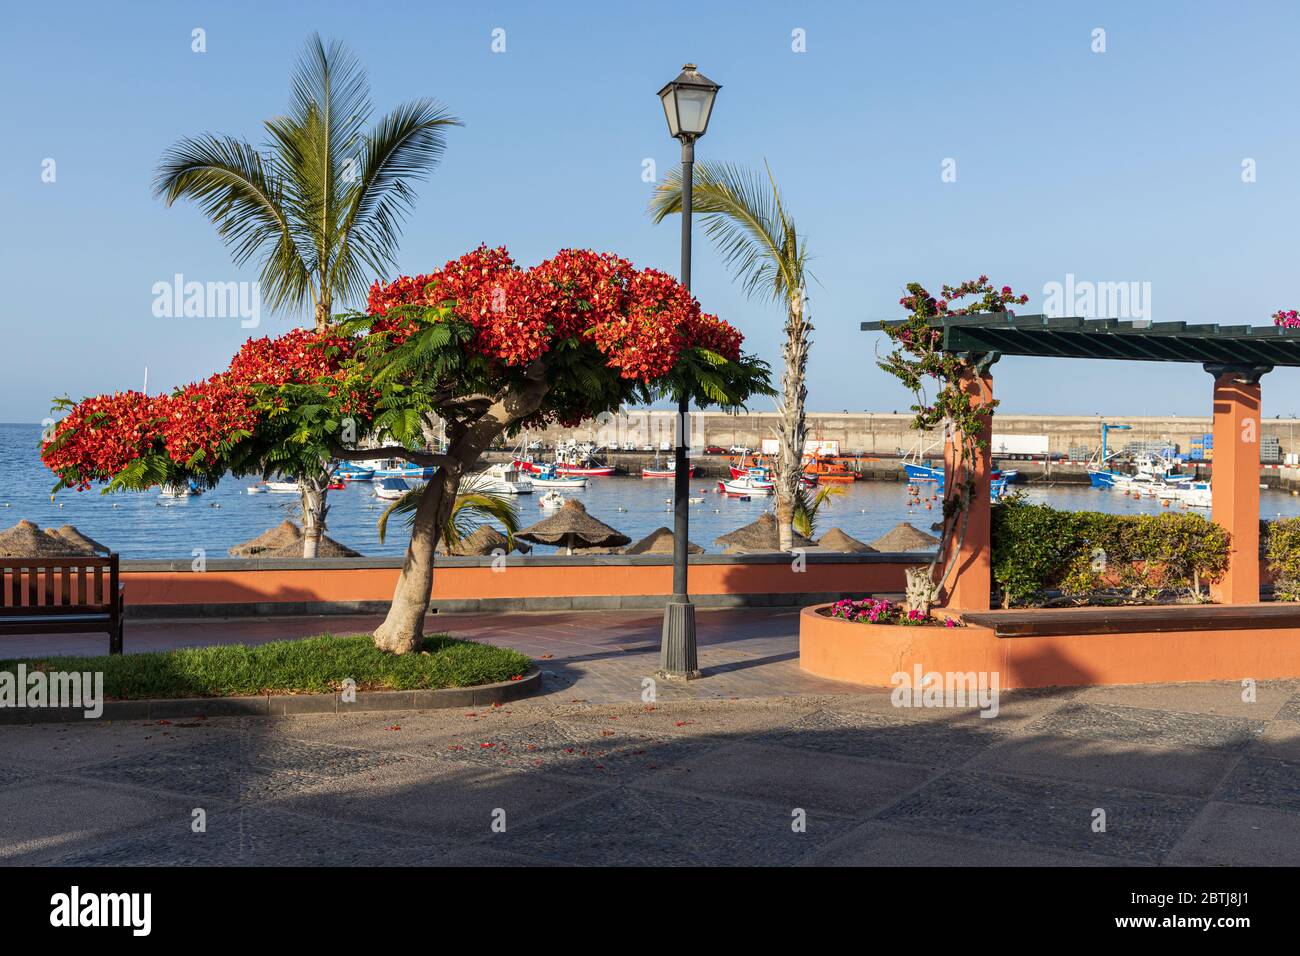 Delonix regia, arbre flamboyant avec des fleurs rouges sur la promenade pendant la phase deux de la désescalade de l'état d'urgence, Covid 19, coronaviru Banque D'Images